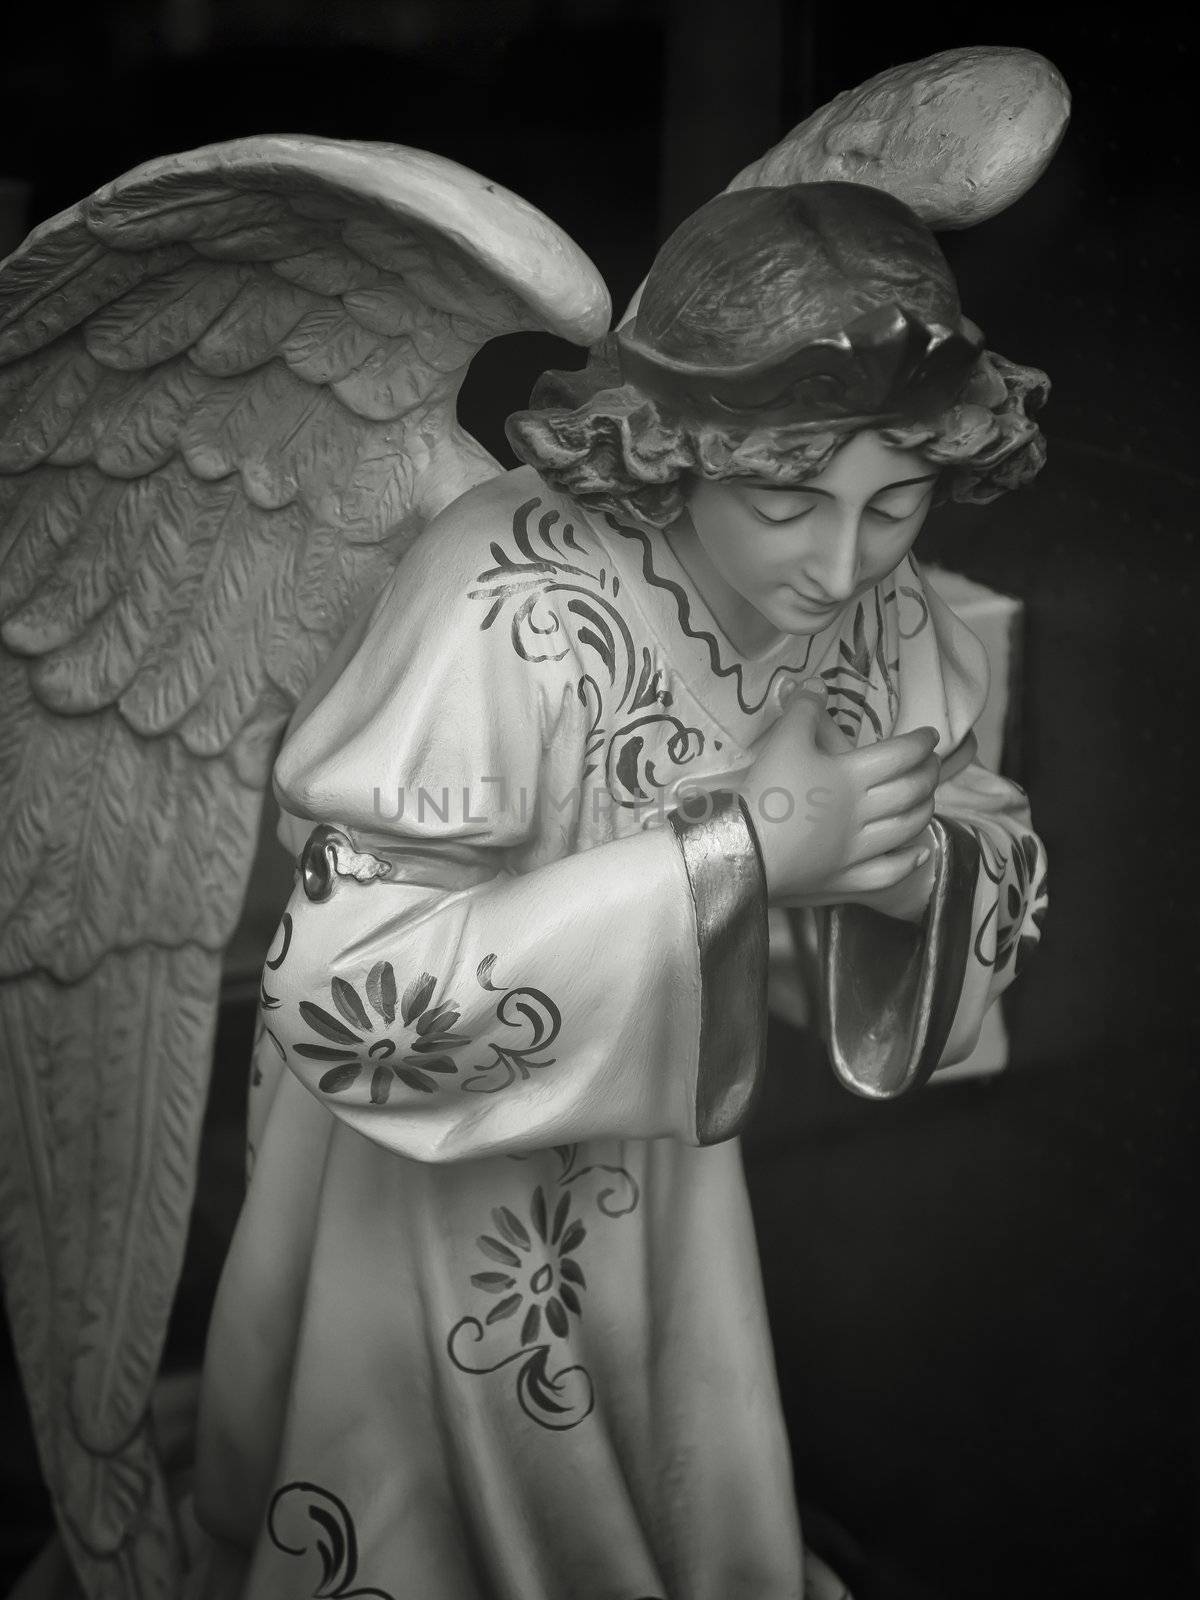 Antique angel figure in shop window display - Orviedo, Spain. Monochrome.